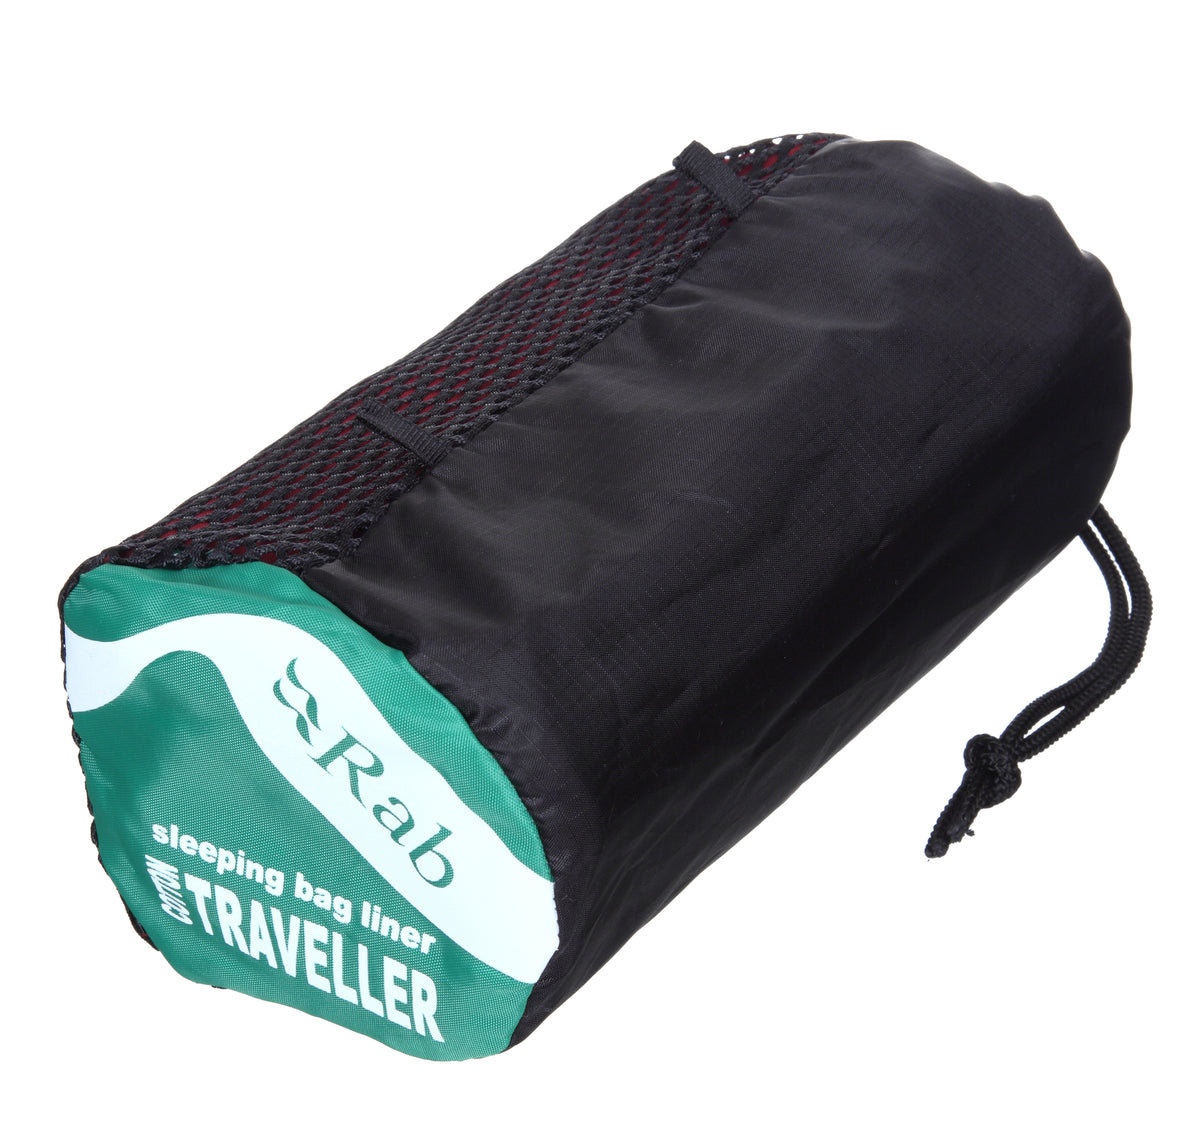 Rab Traveller Cotton Sleeping Bag Liner